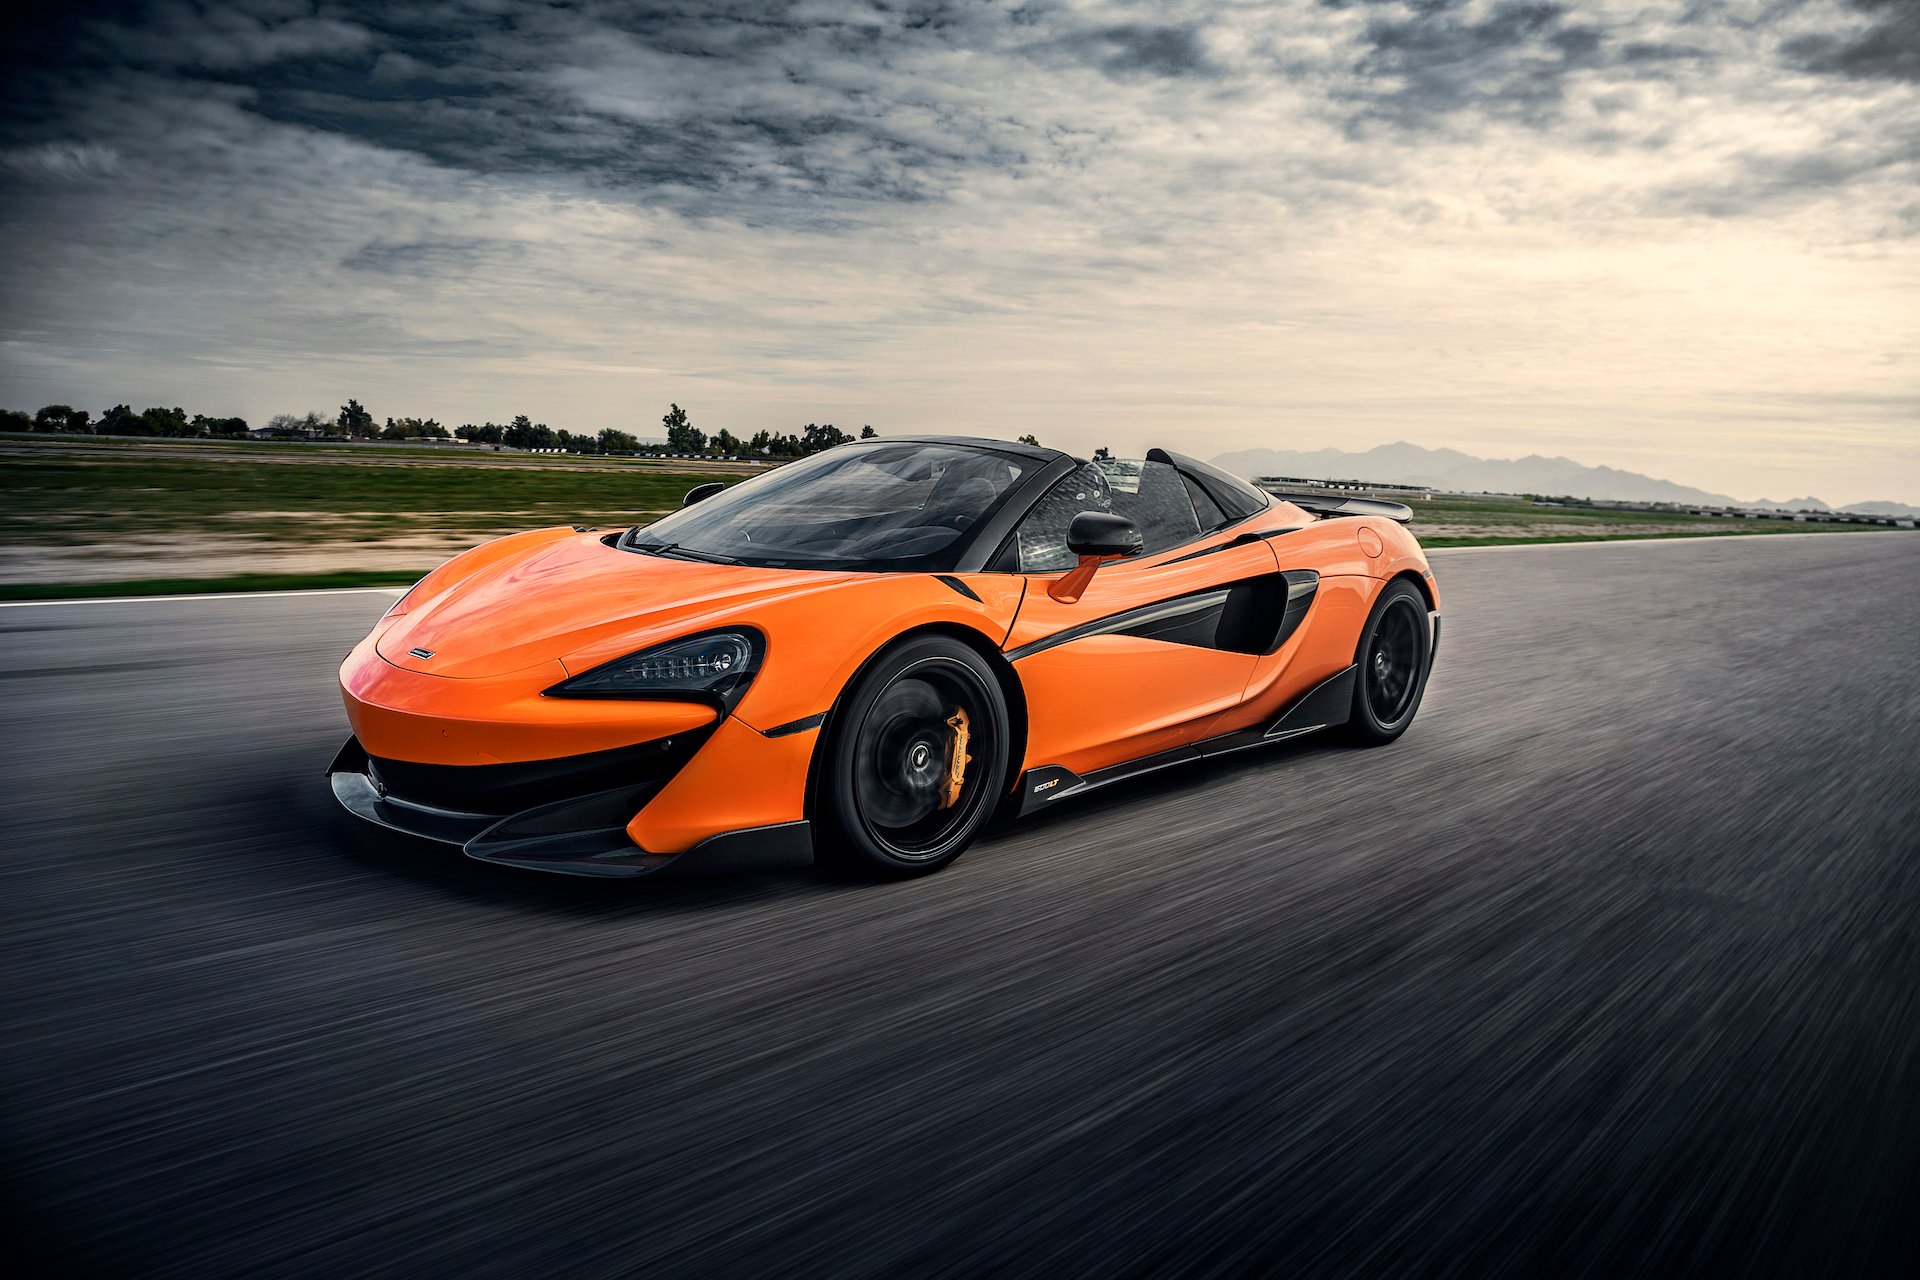 First drive review: 2020 McLaren 600LT Spider sounds serious